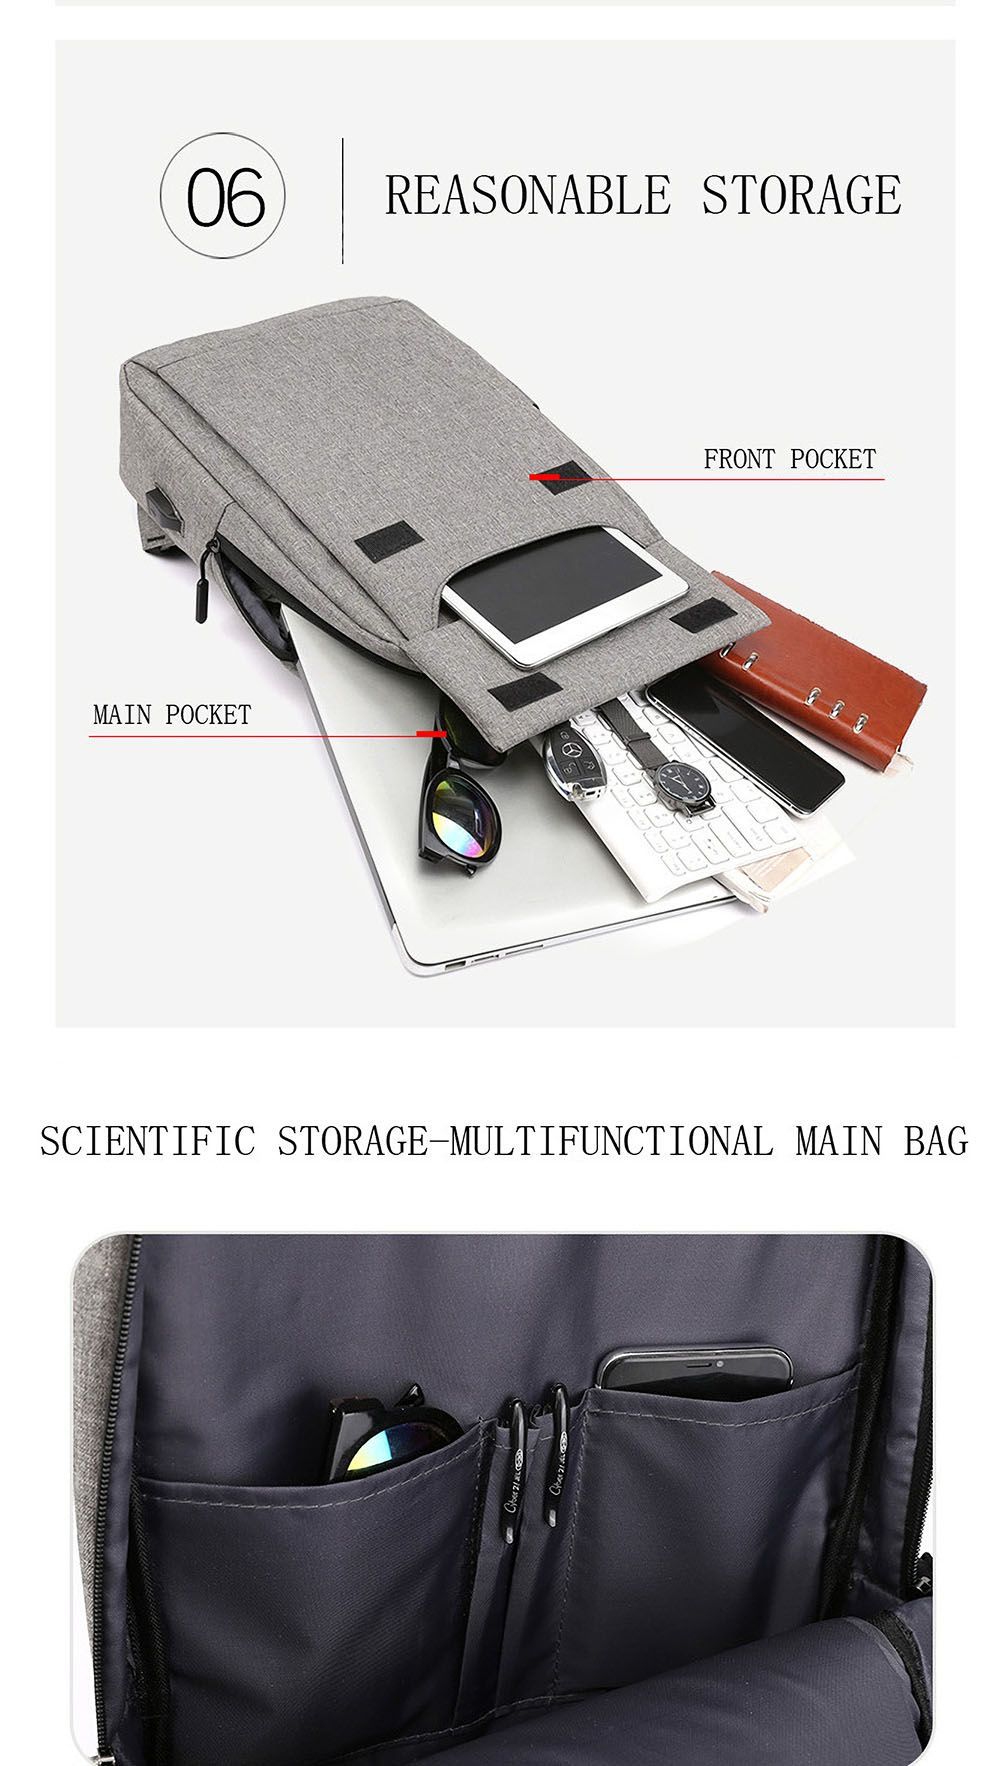 156-inch-Laptop-Bag-Backpack-with-USB-Charging-Port-Multifunction-School-Bag-Travel-Bag-Nylon-Water--1585156